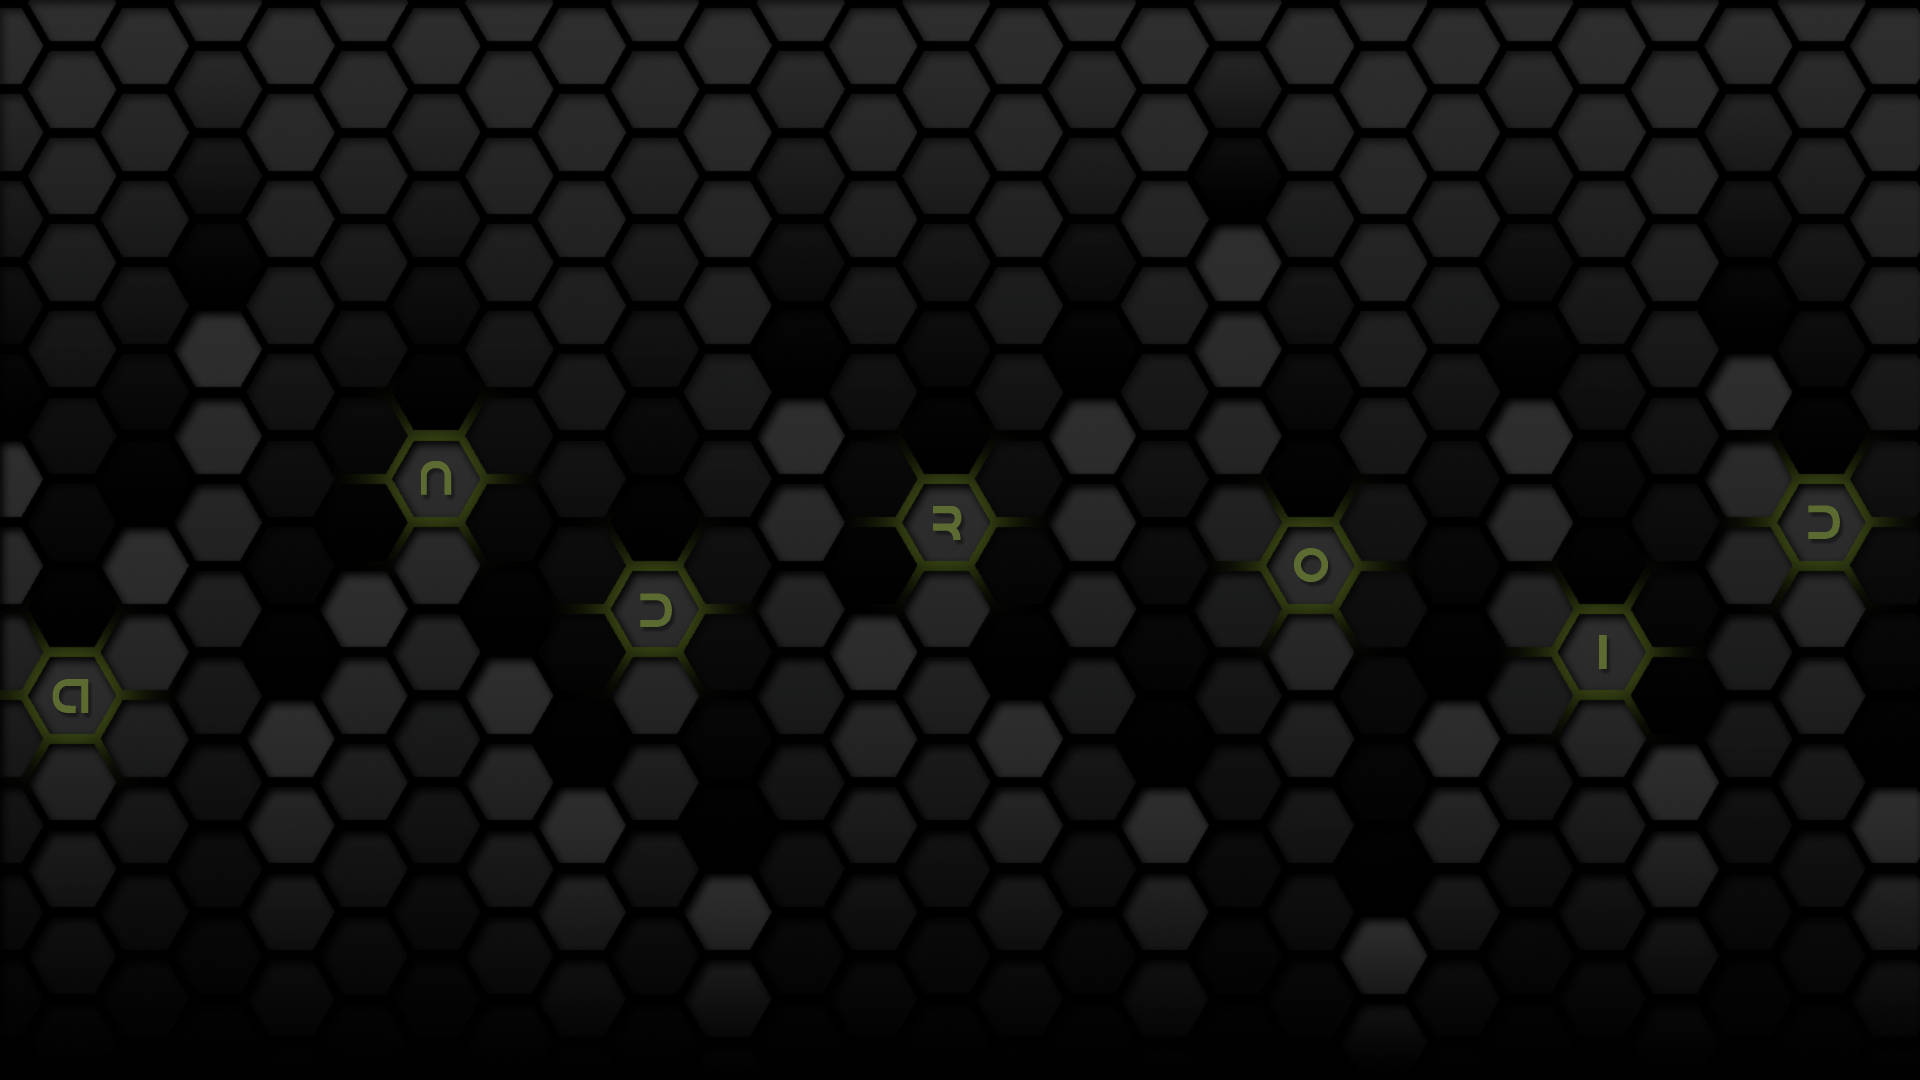 Black Hexagonal Android Wallpaper